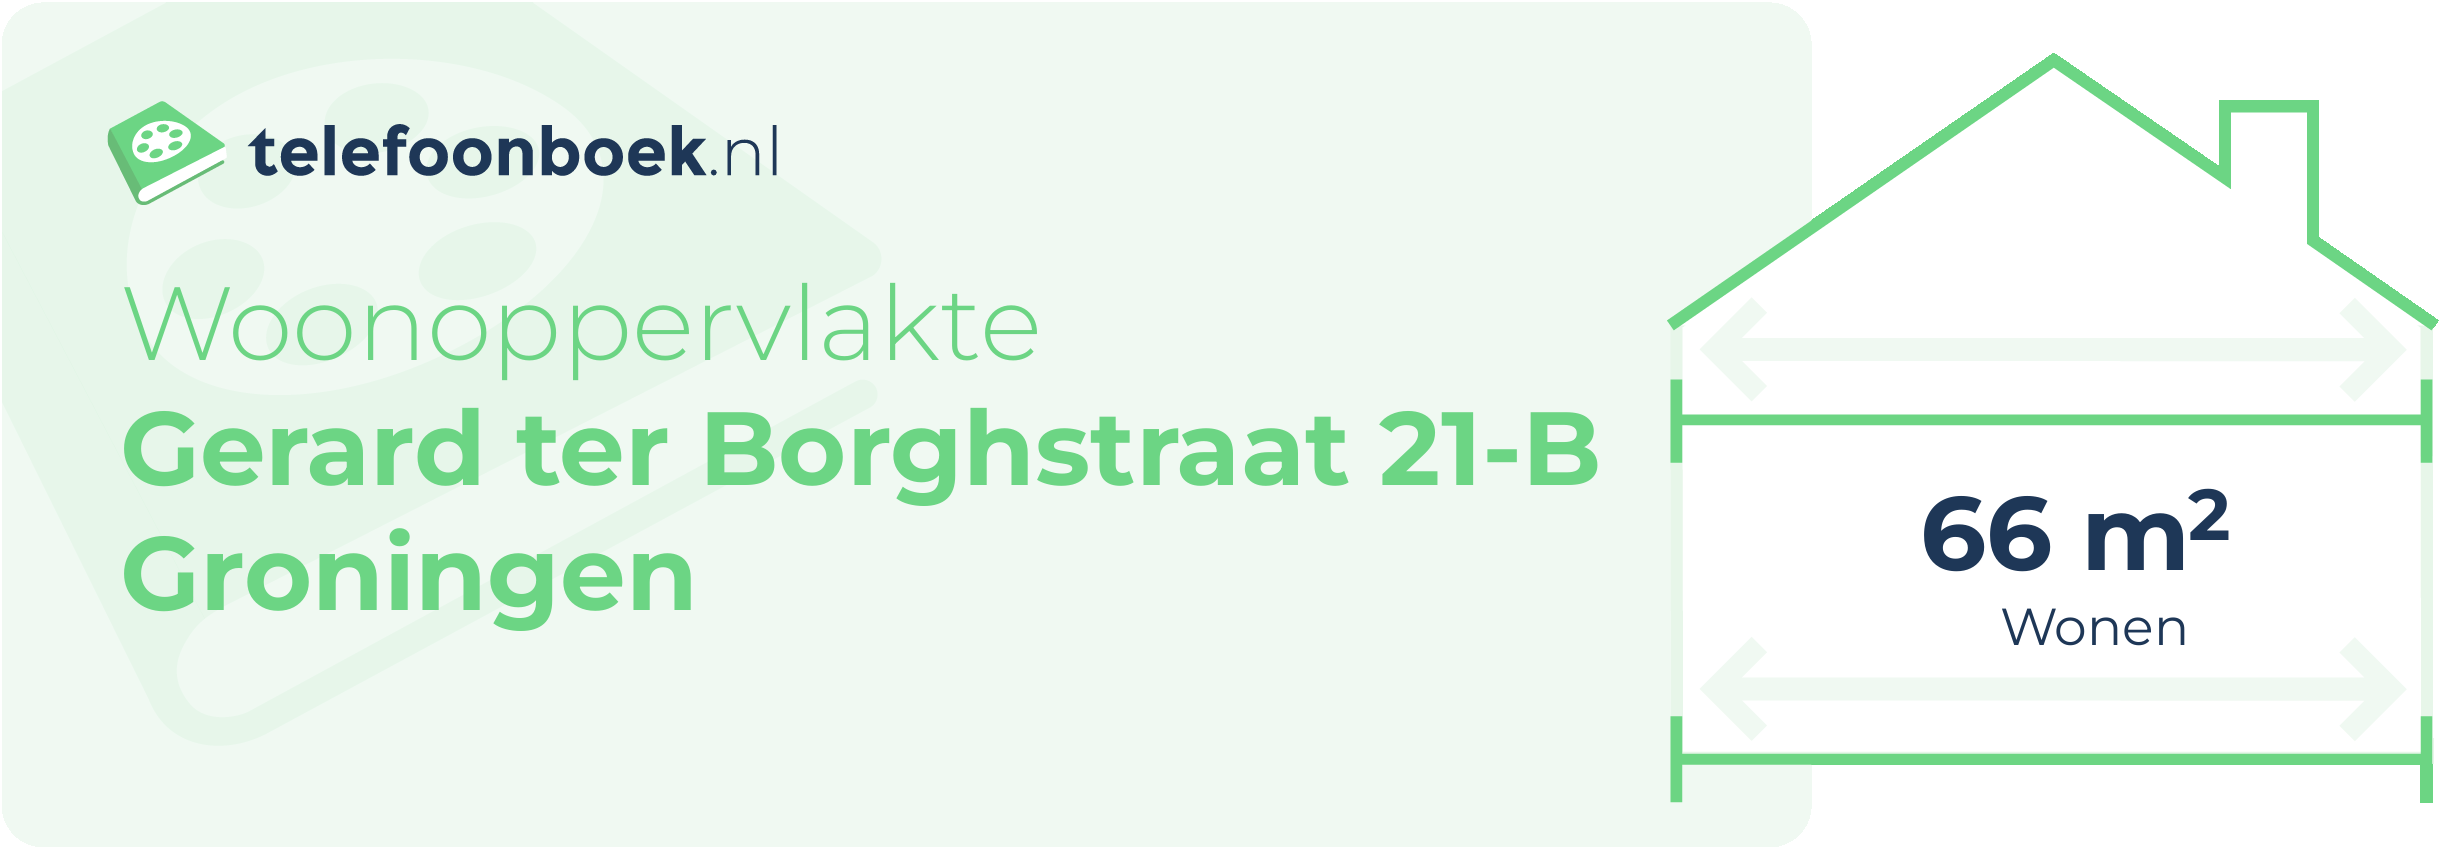 Woonoppervlakte Gerard Ter Borghstraat 21-B Groningen